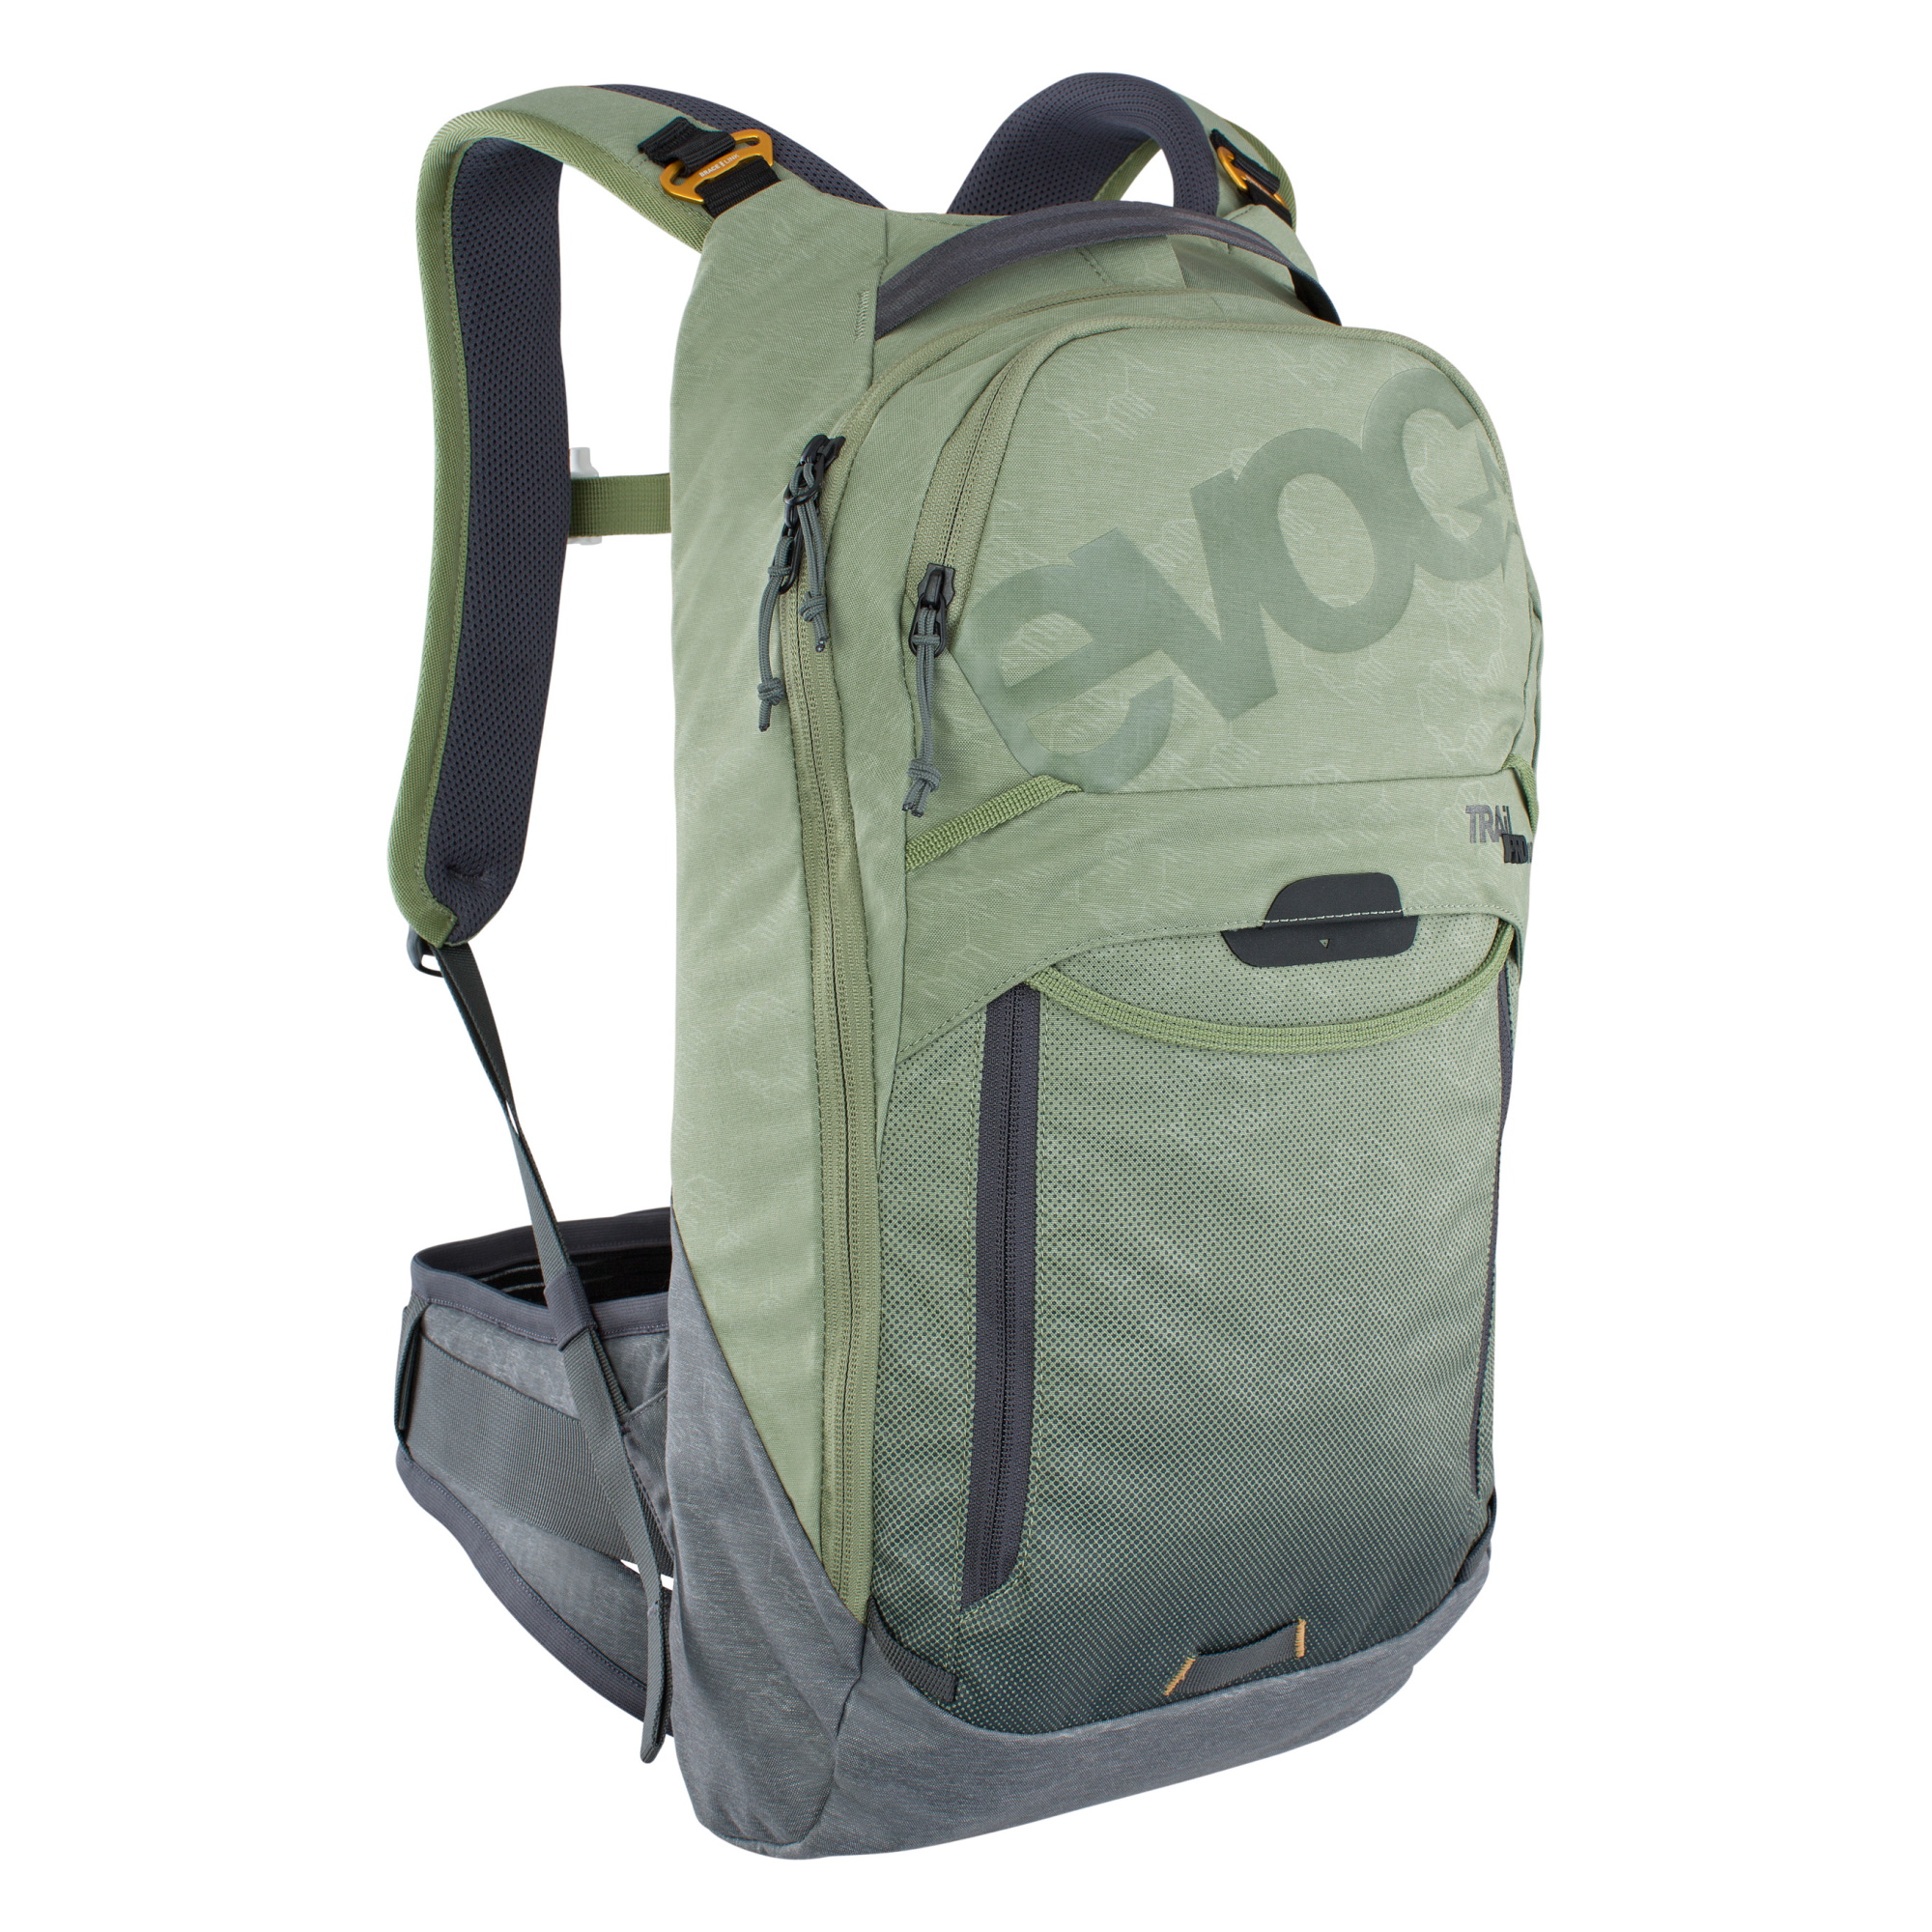 Trail Pro 10 light olive-carbon grey